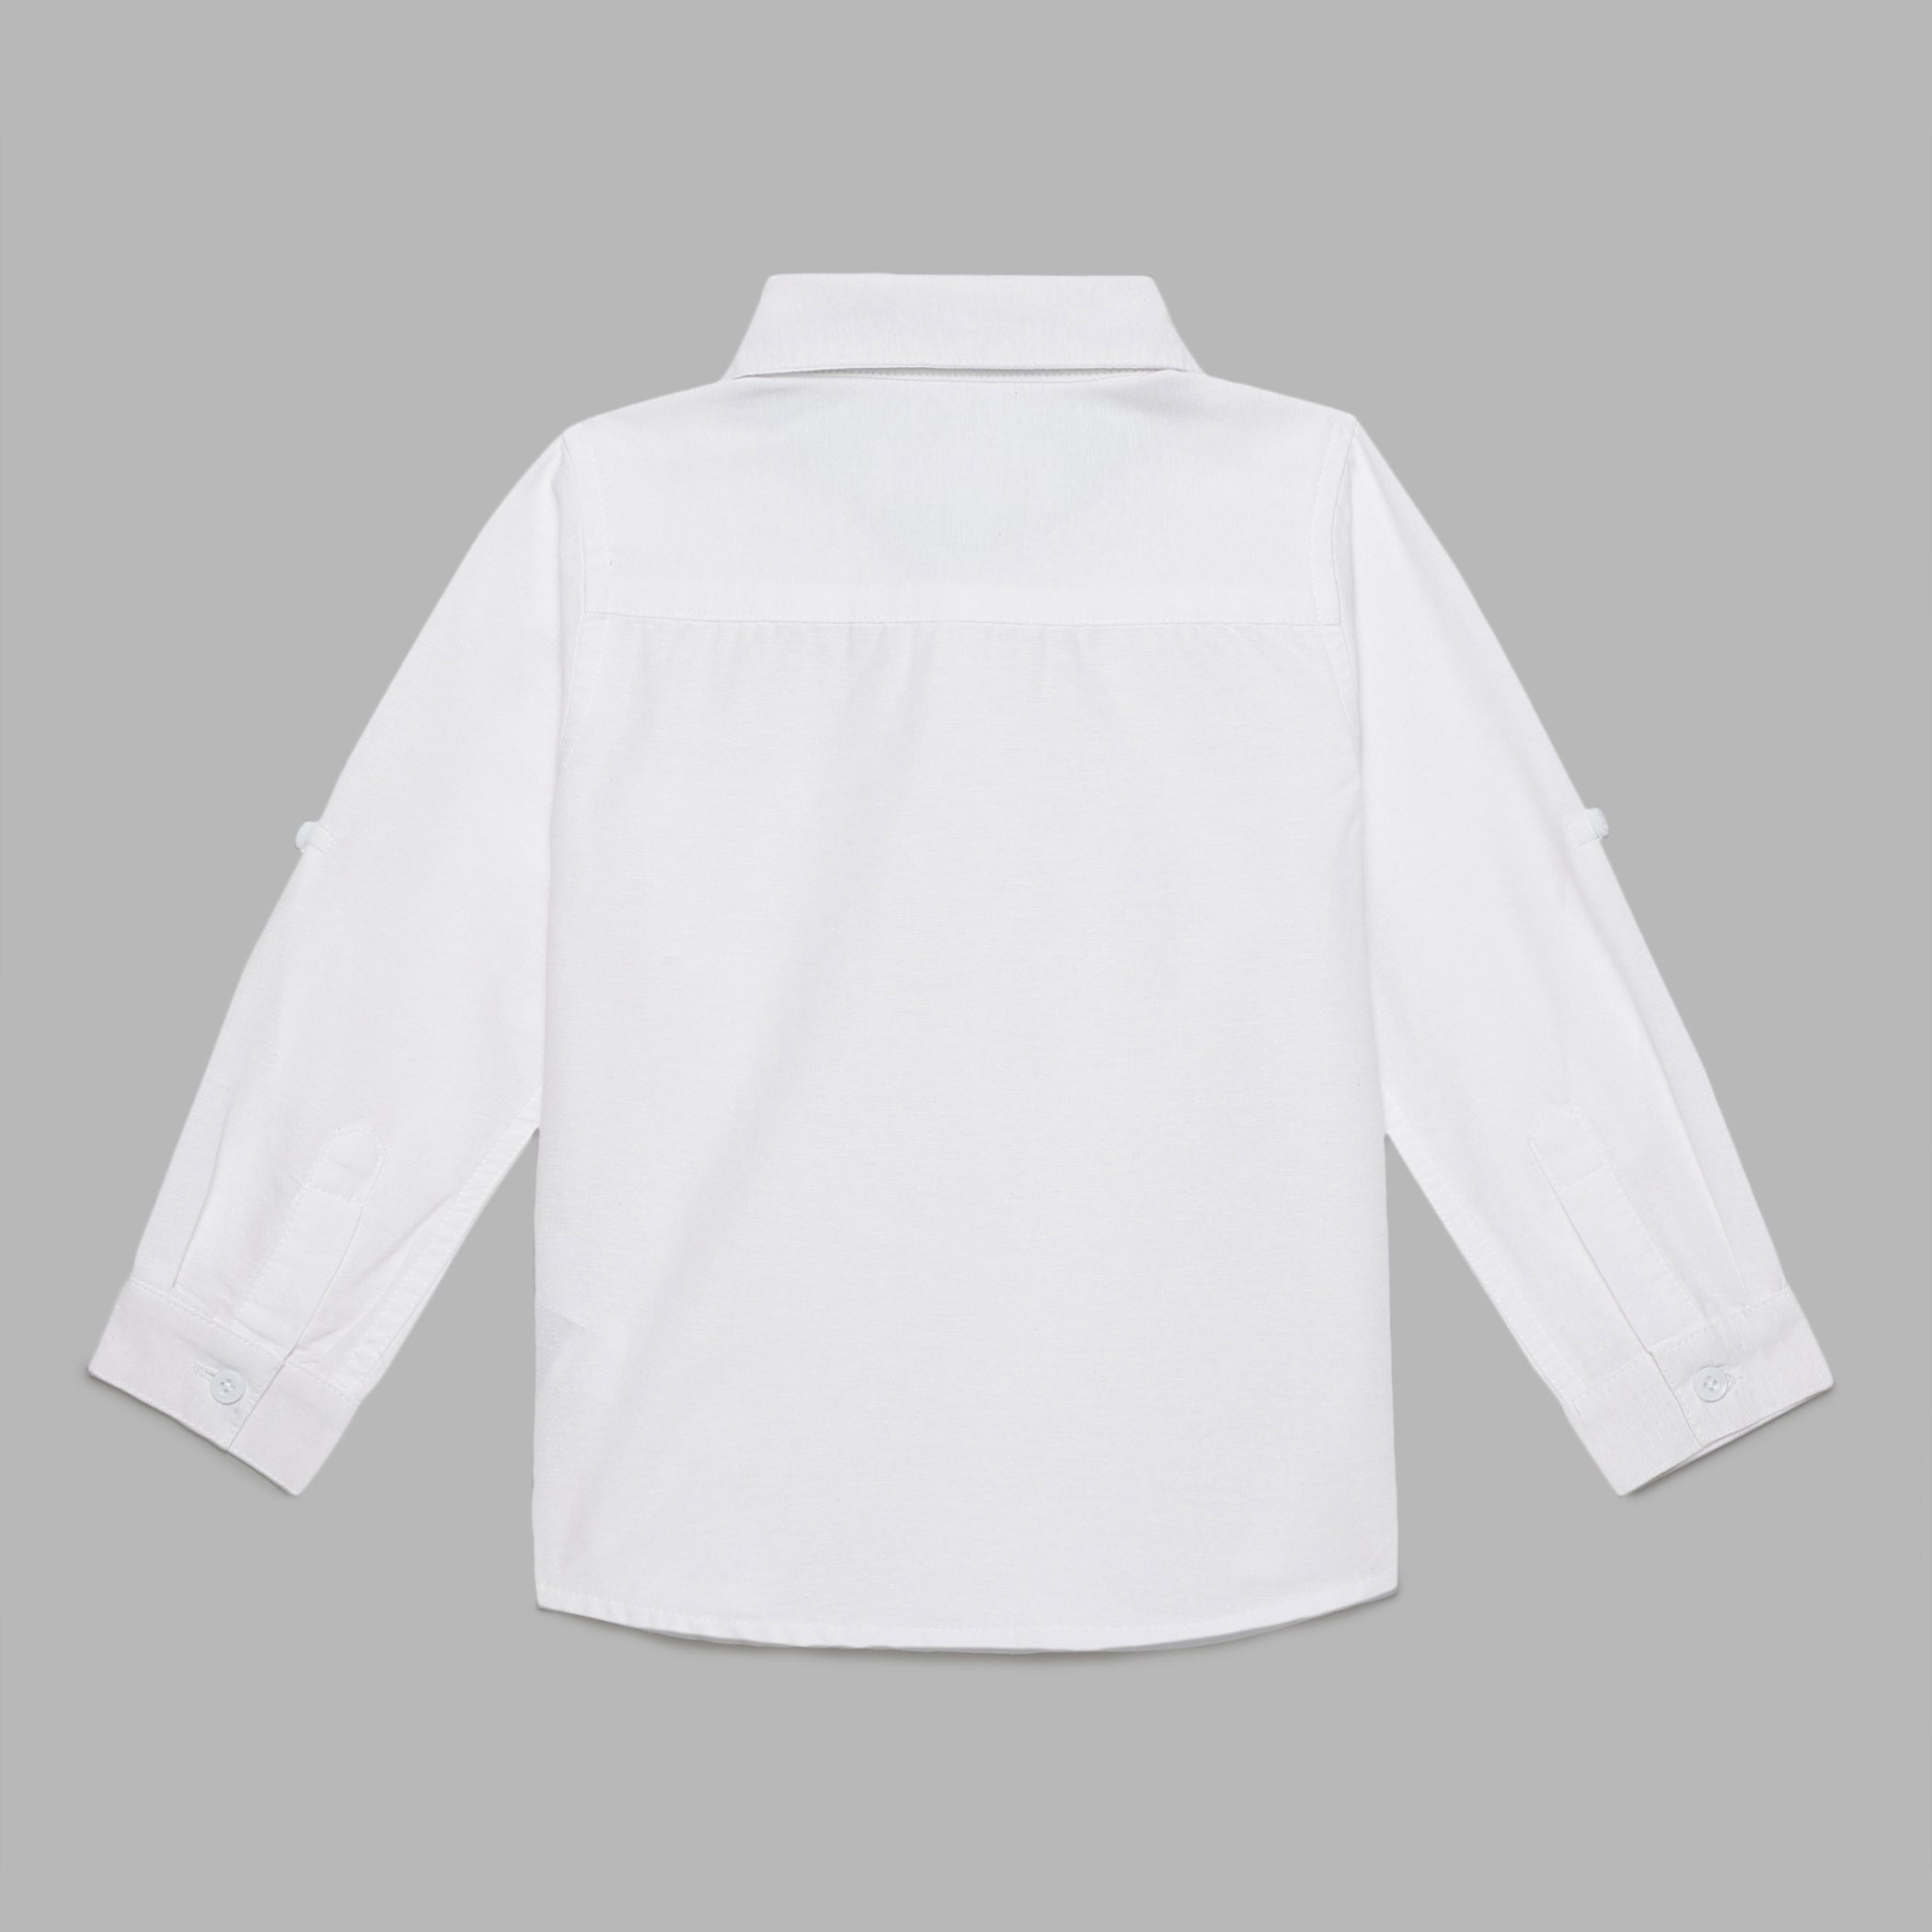 Baby Boys Collar Neck Roll Up Sleeve White Shirt